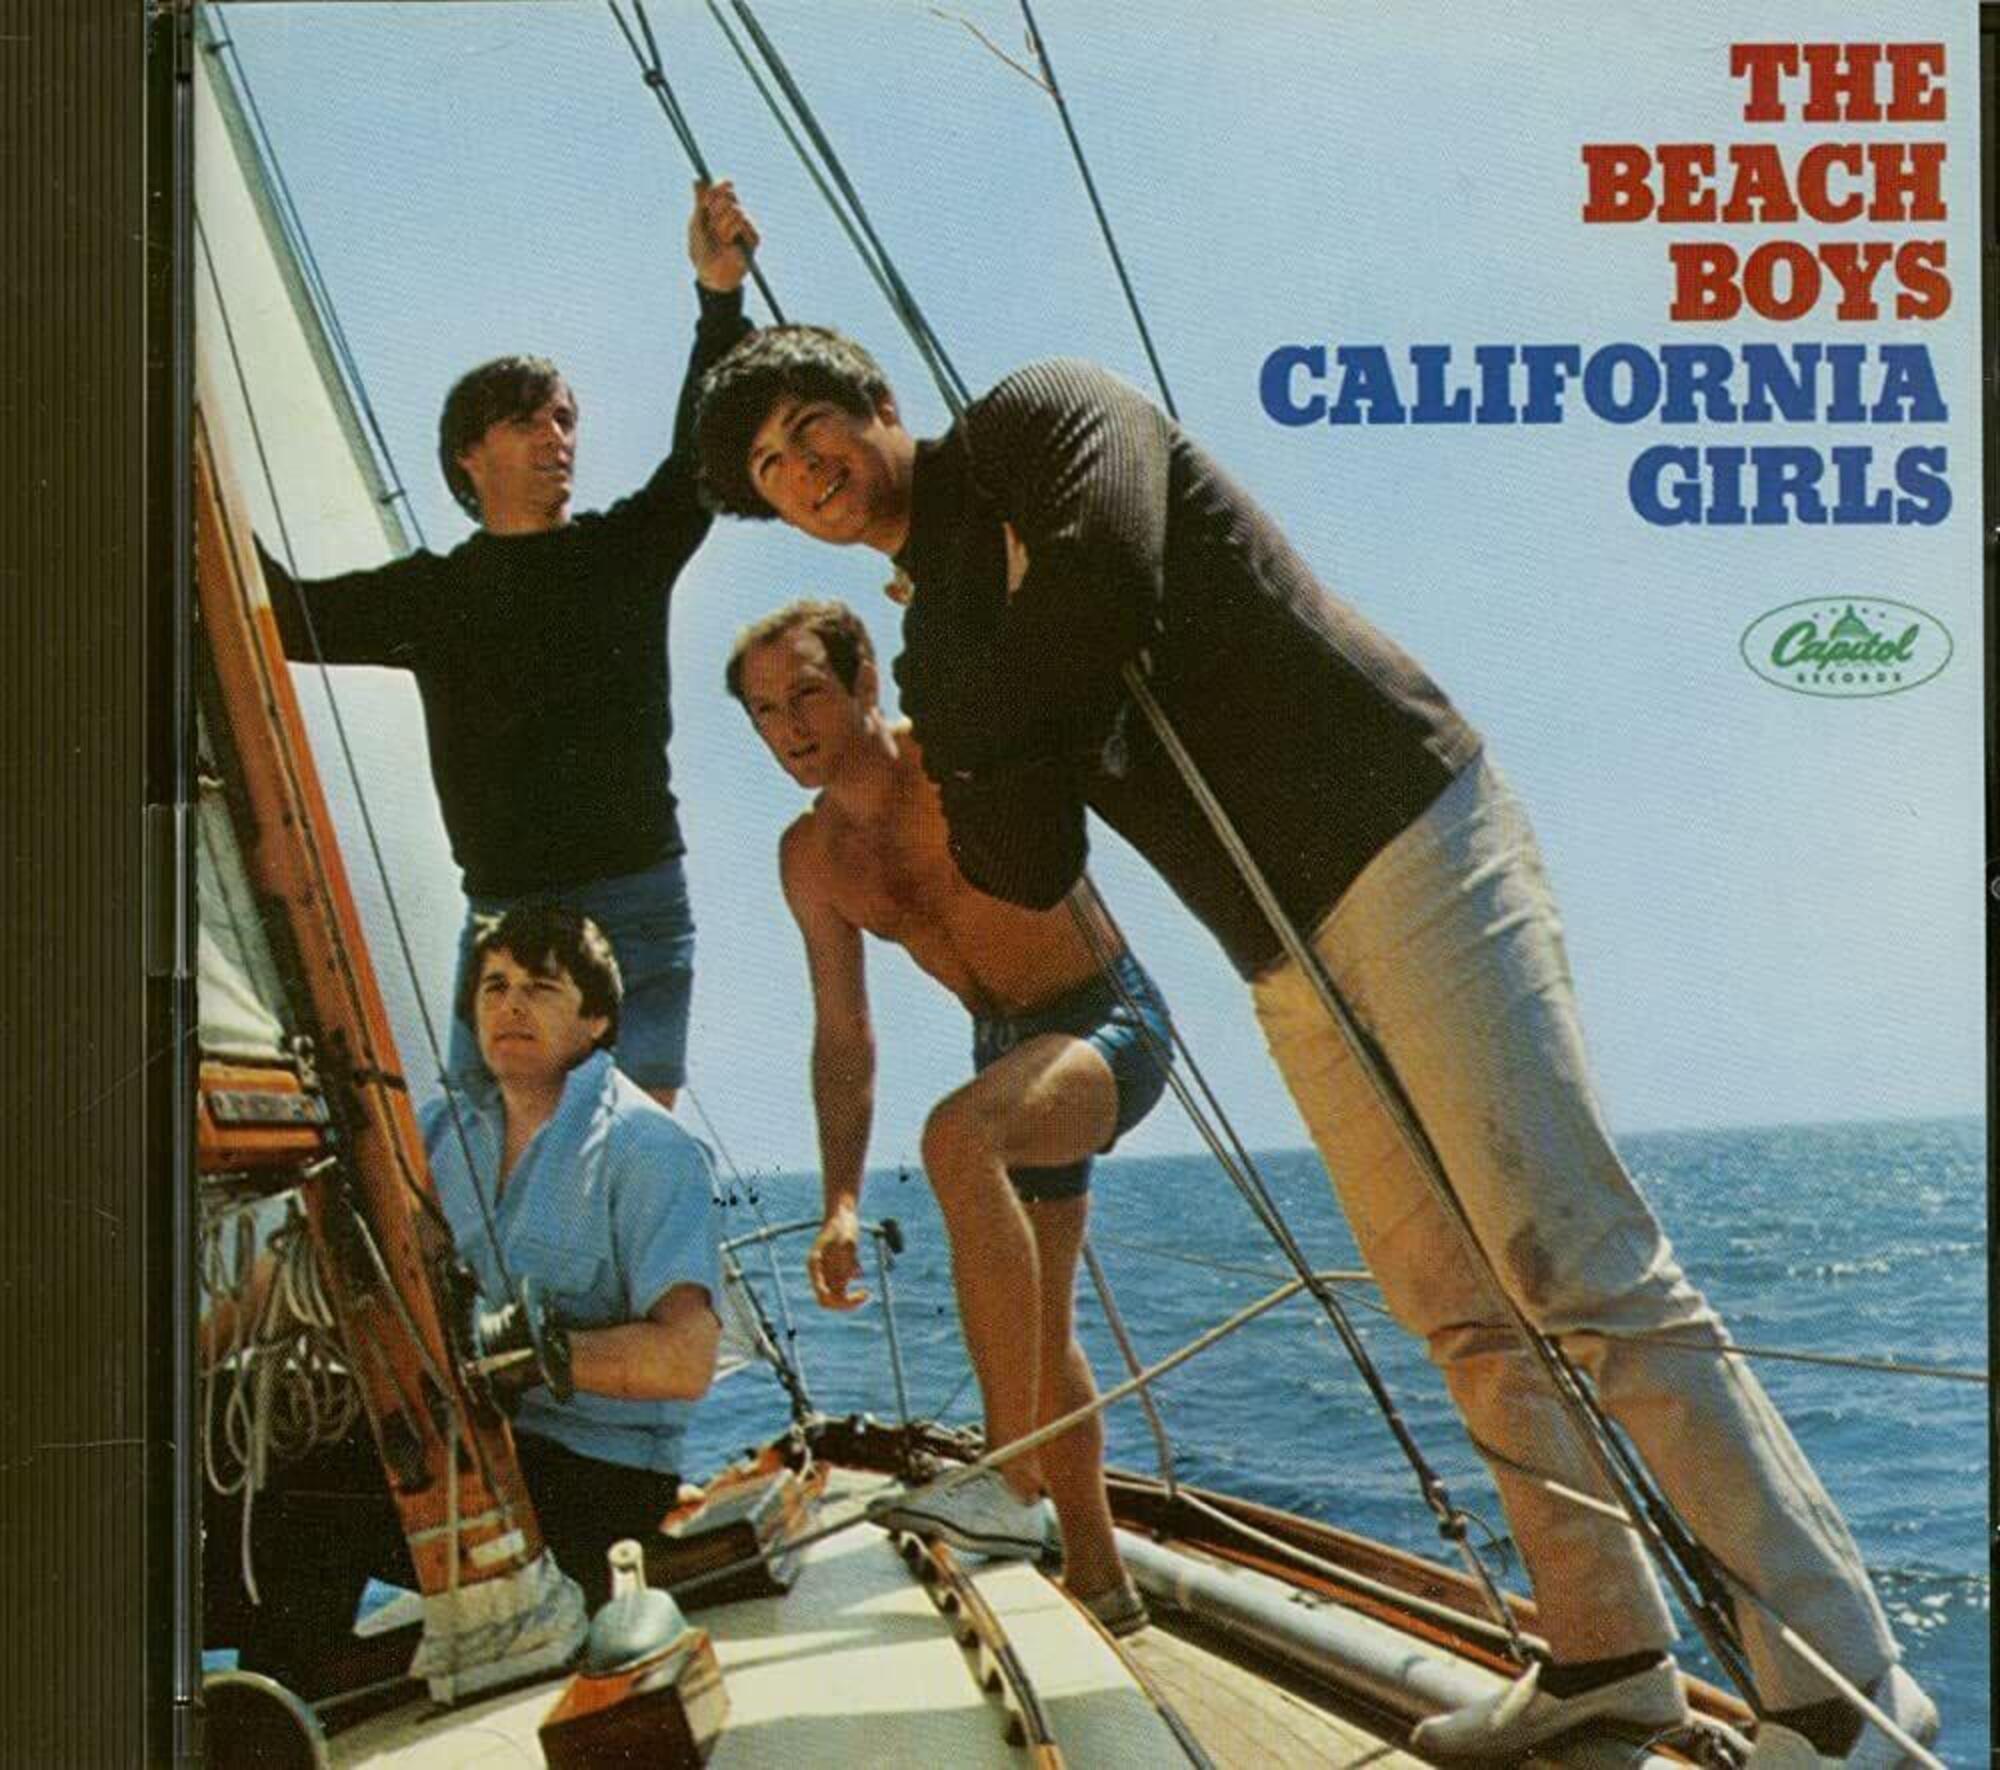 The Beach Boys, California Girls